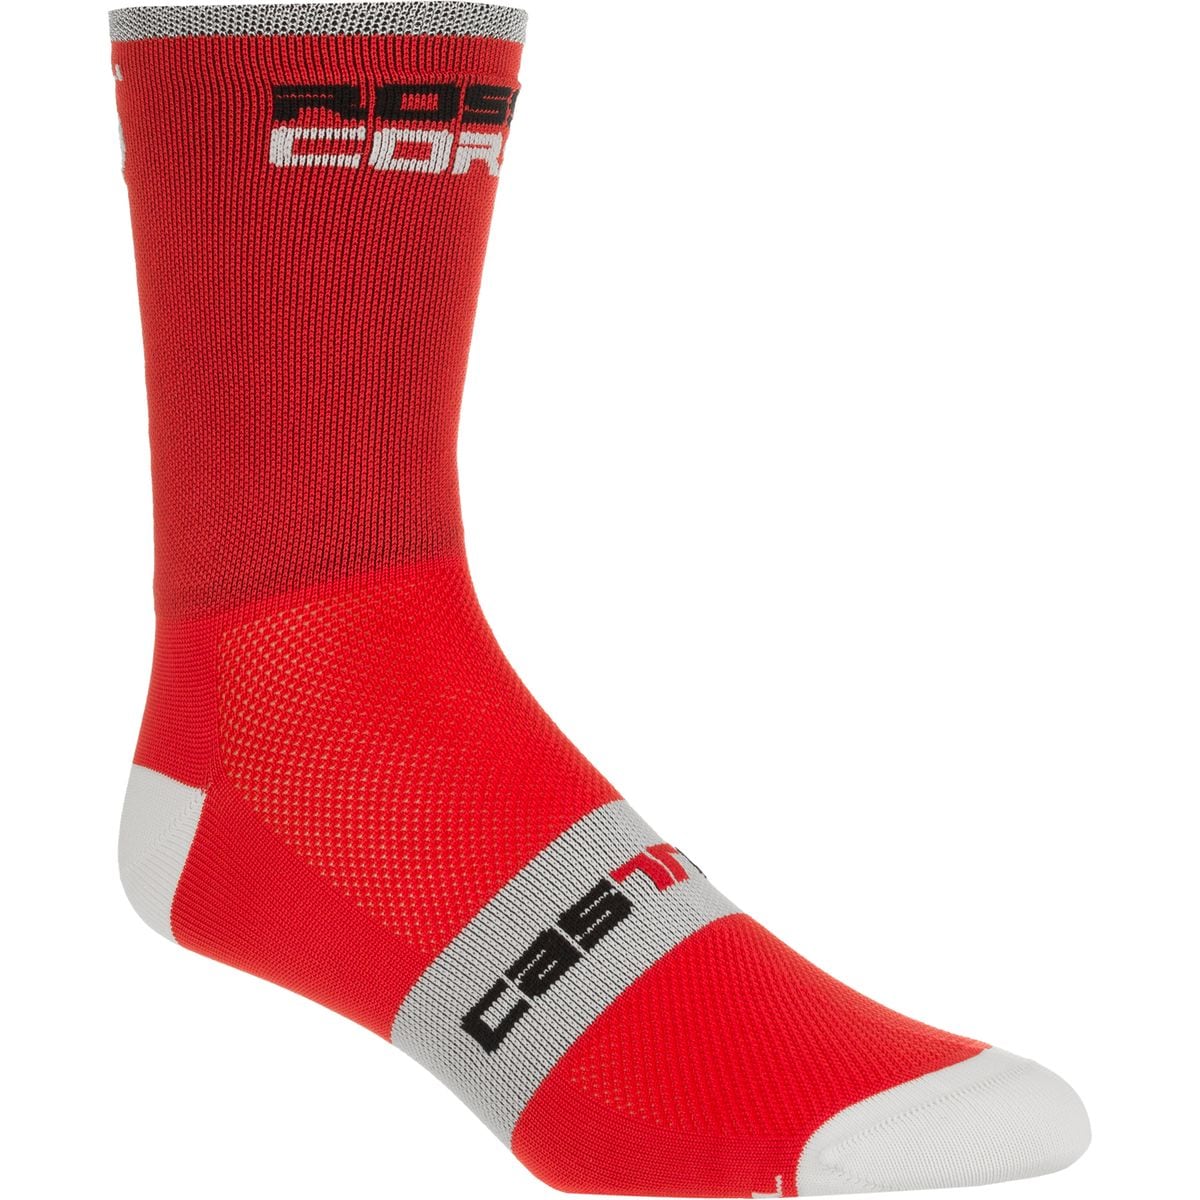 Castelli Rosso Corsa 13 Sock Men's